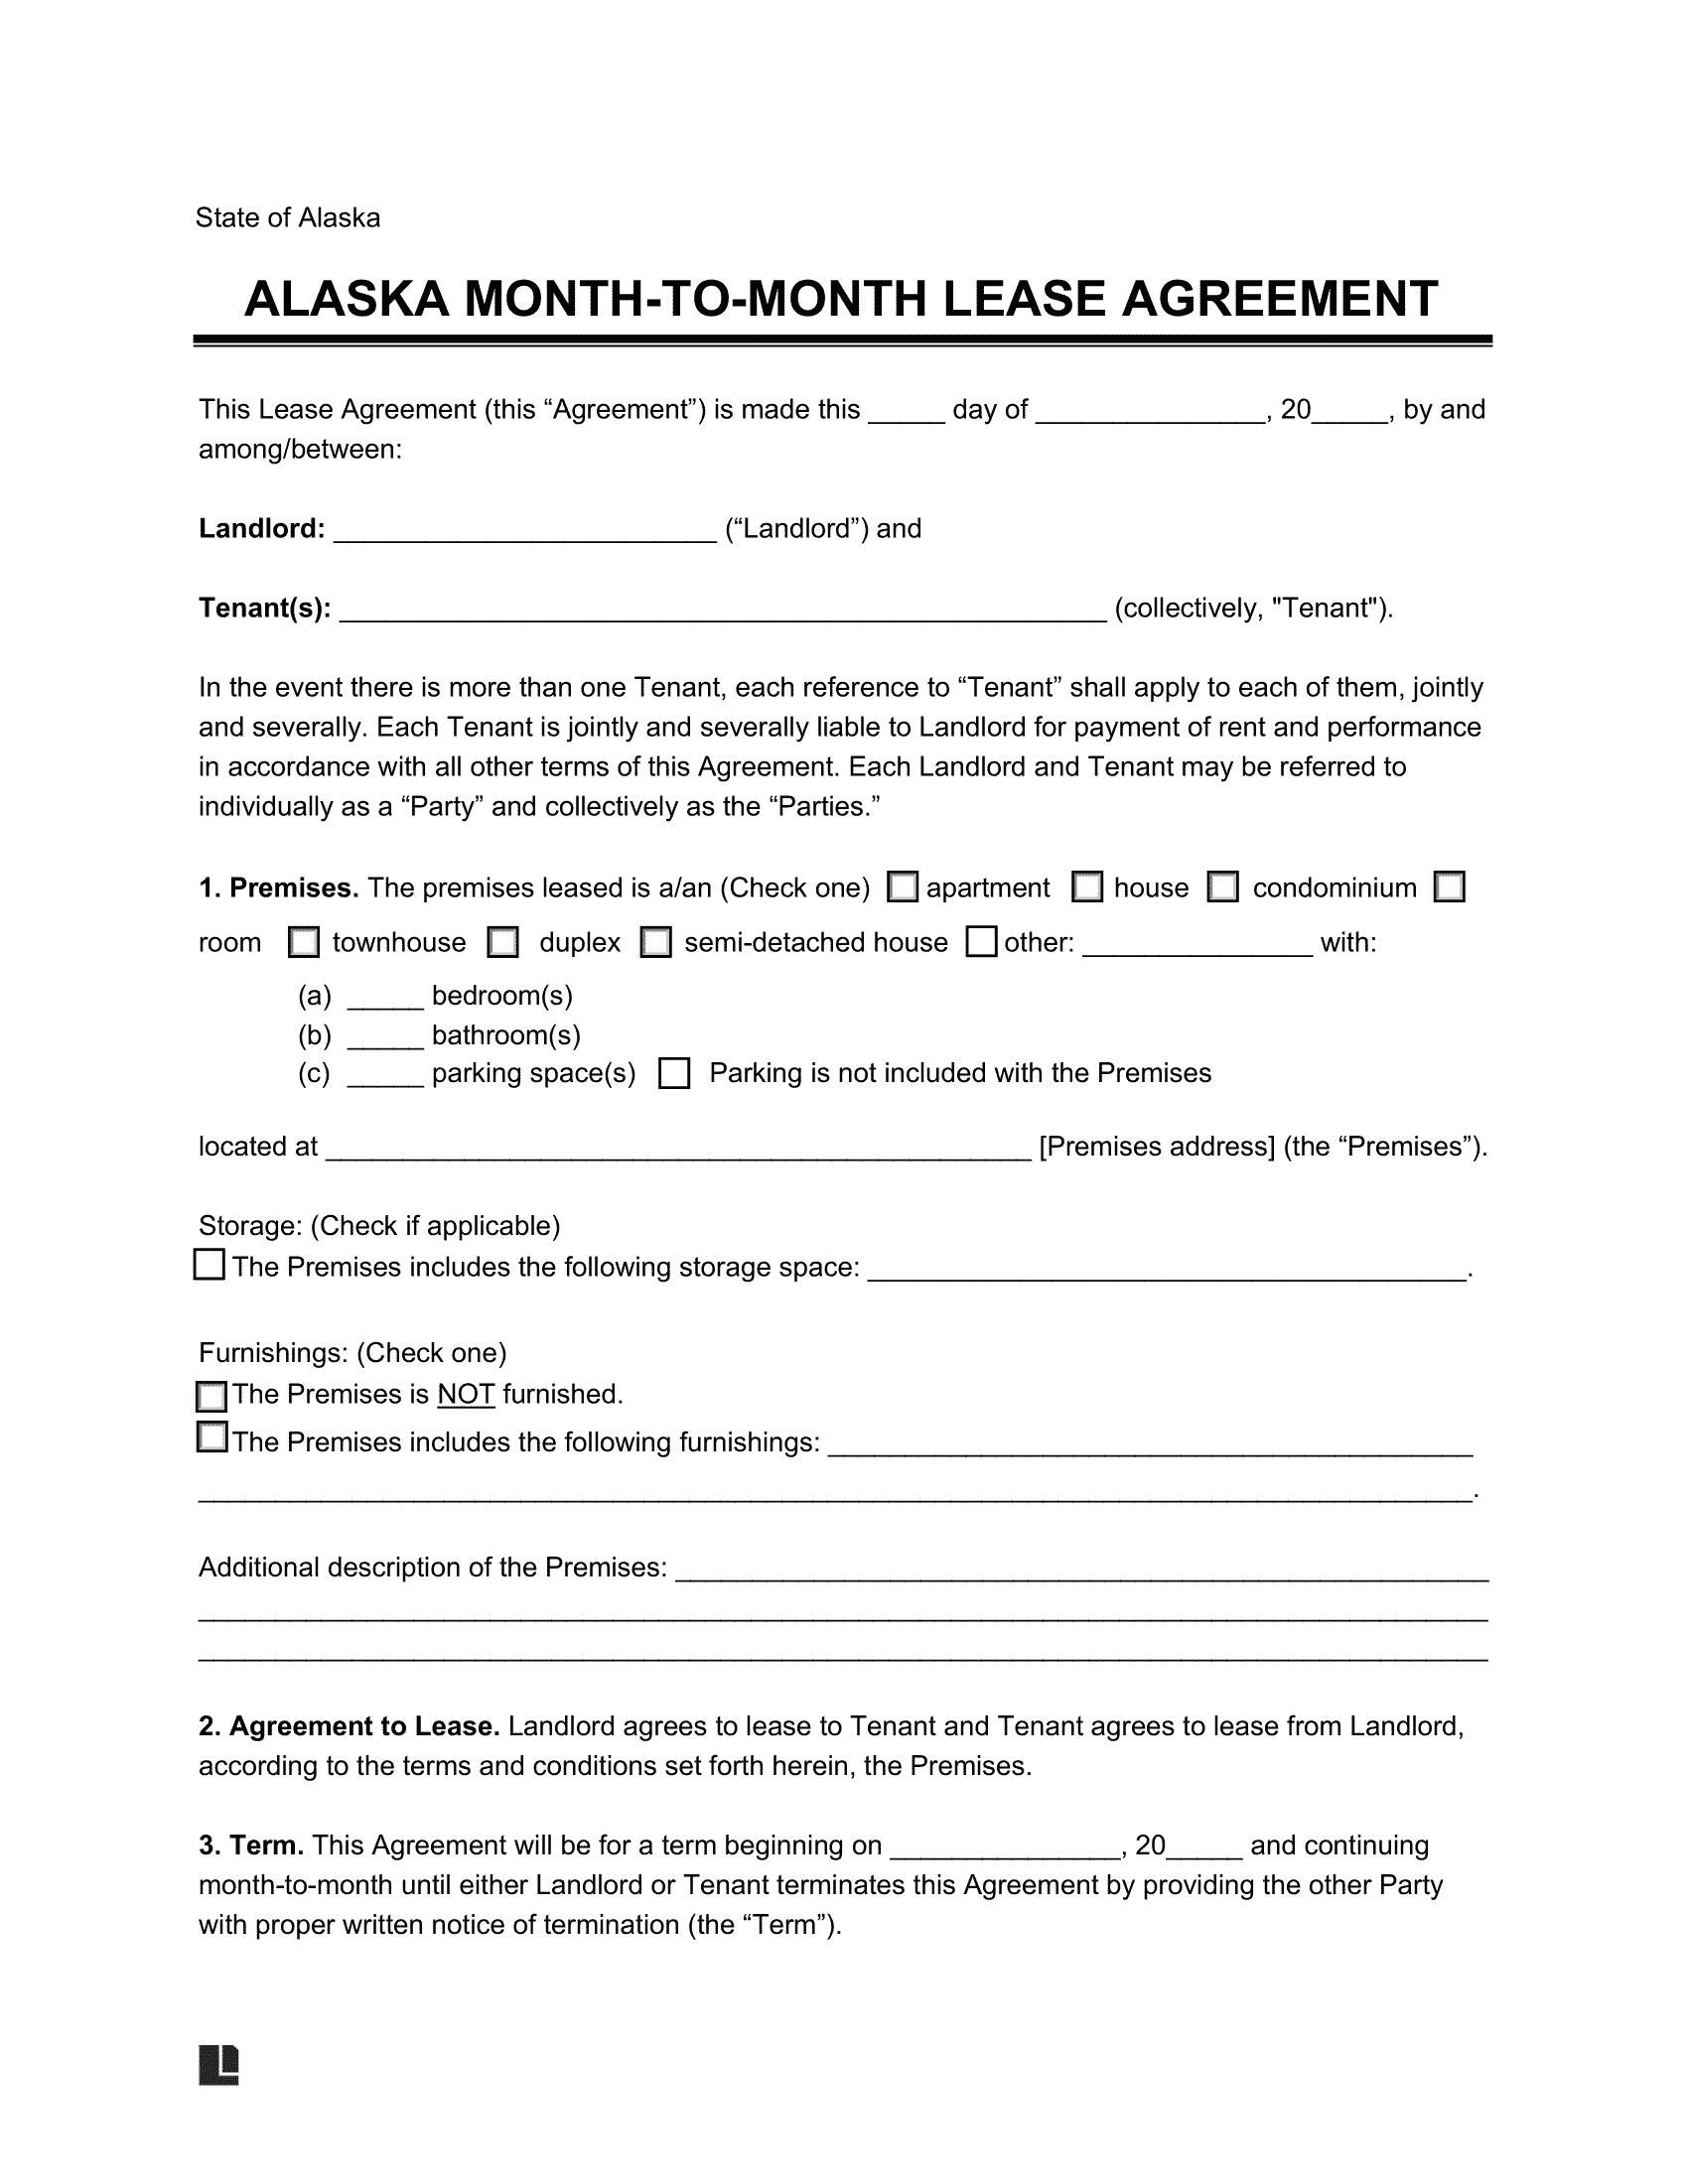 Alaska Month-to-Month Rental Agreement